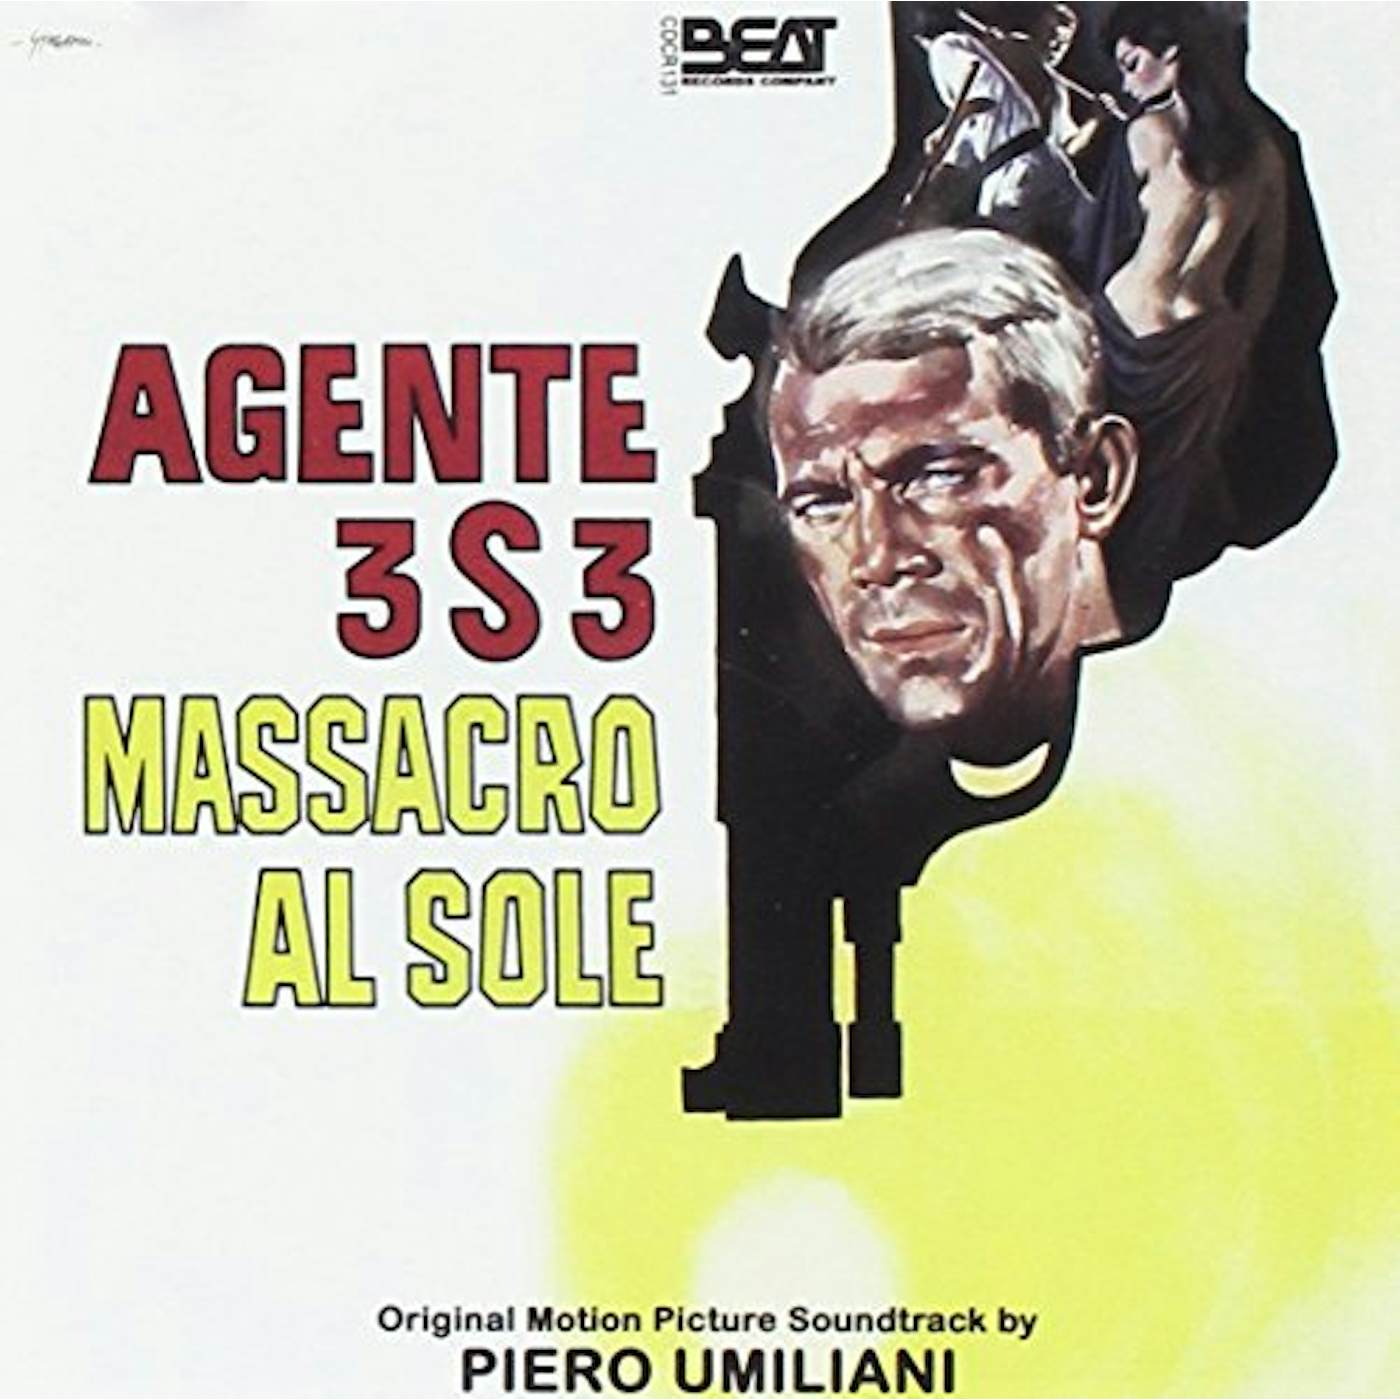 Piero Umiliani AGENTE 3S3 MASSACRO AL SOLE / Original Soundtrack CD